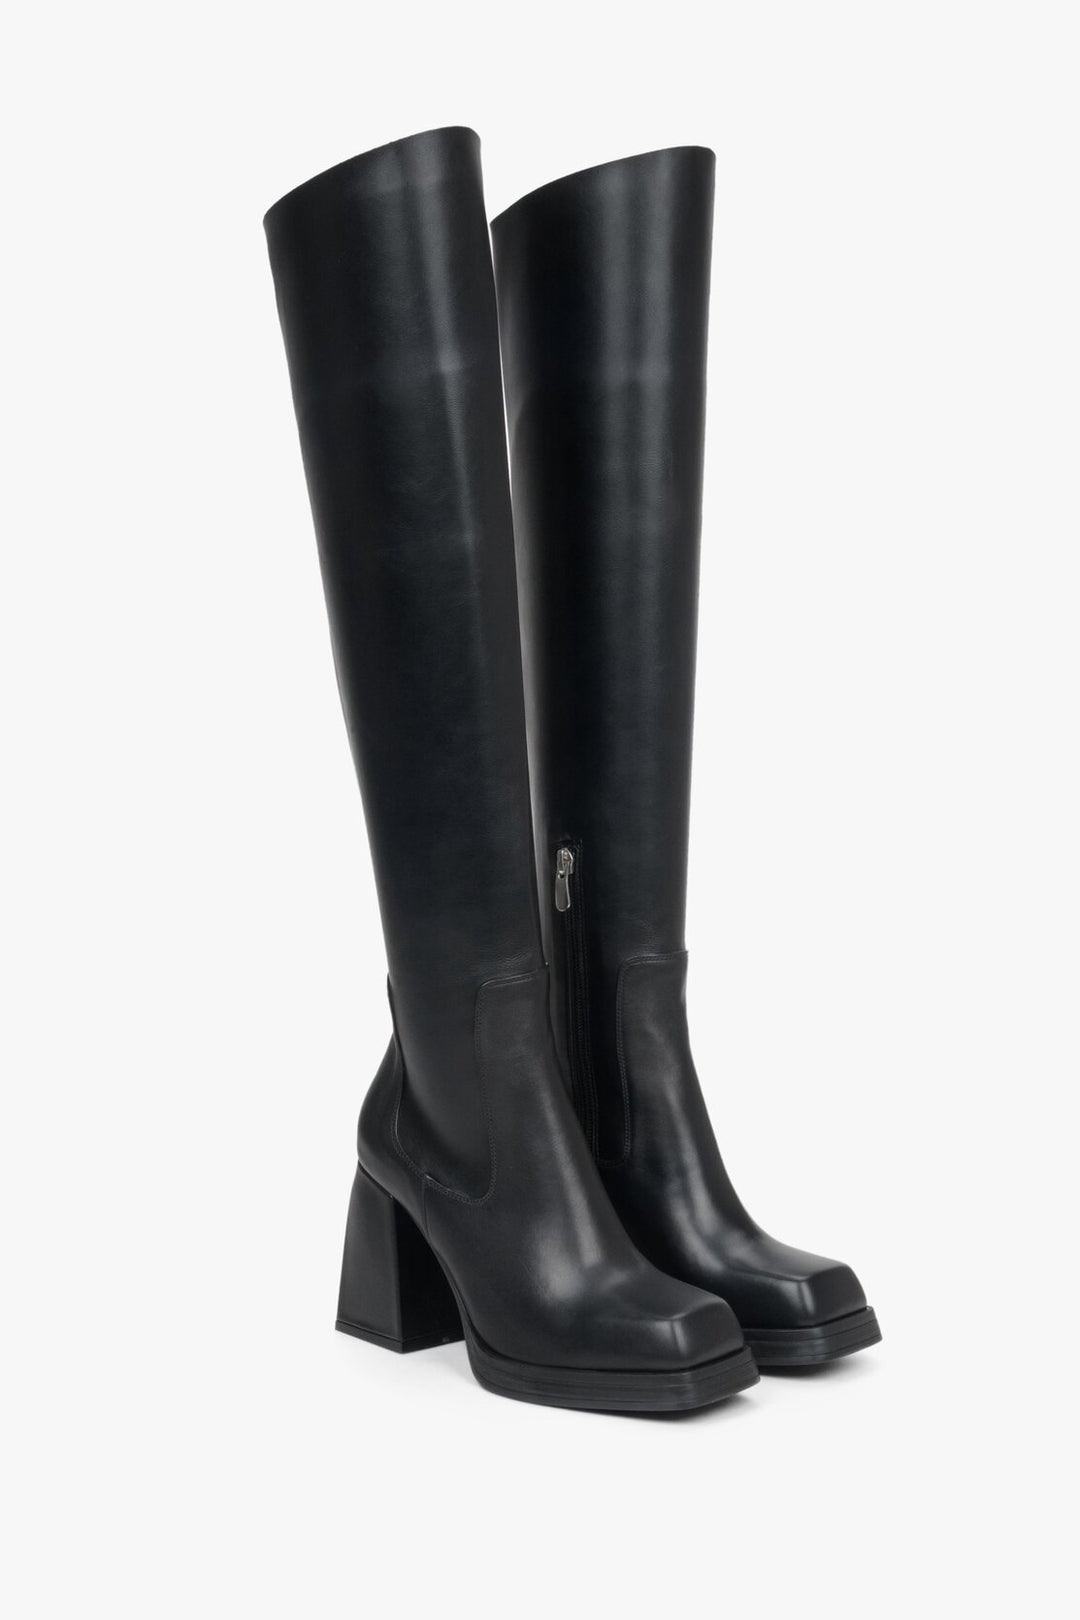 Elegant black women's boots genuine leather - presentation of a shoe toe and sideline.